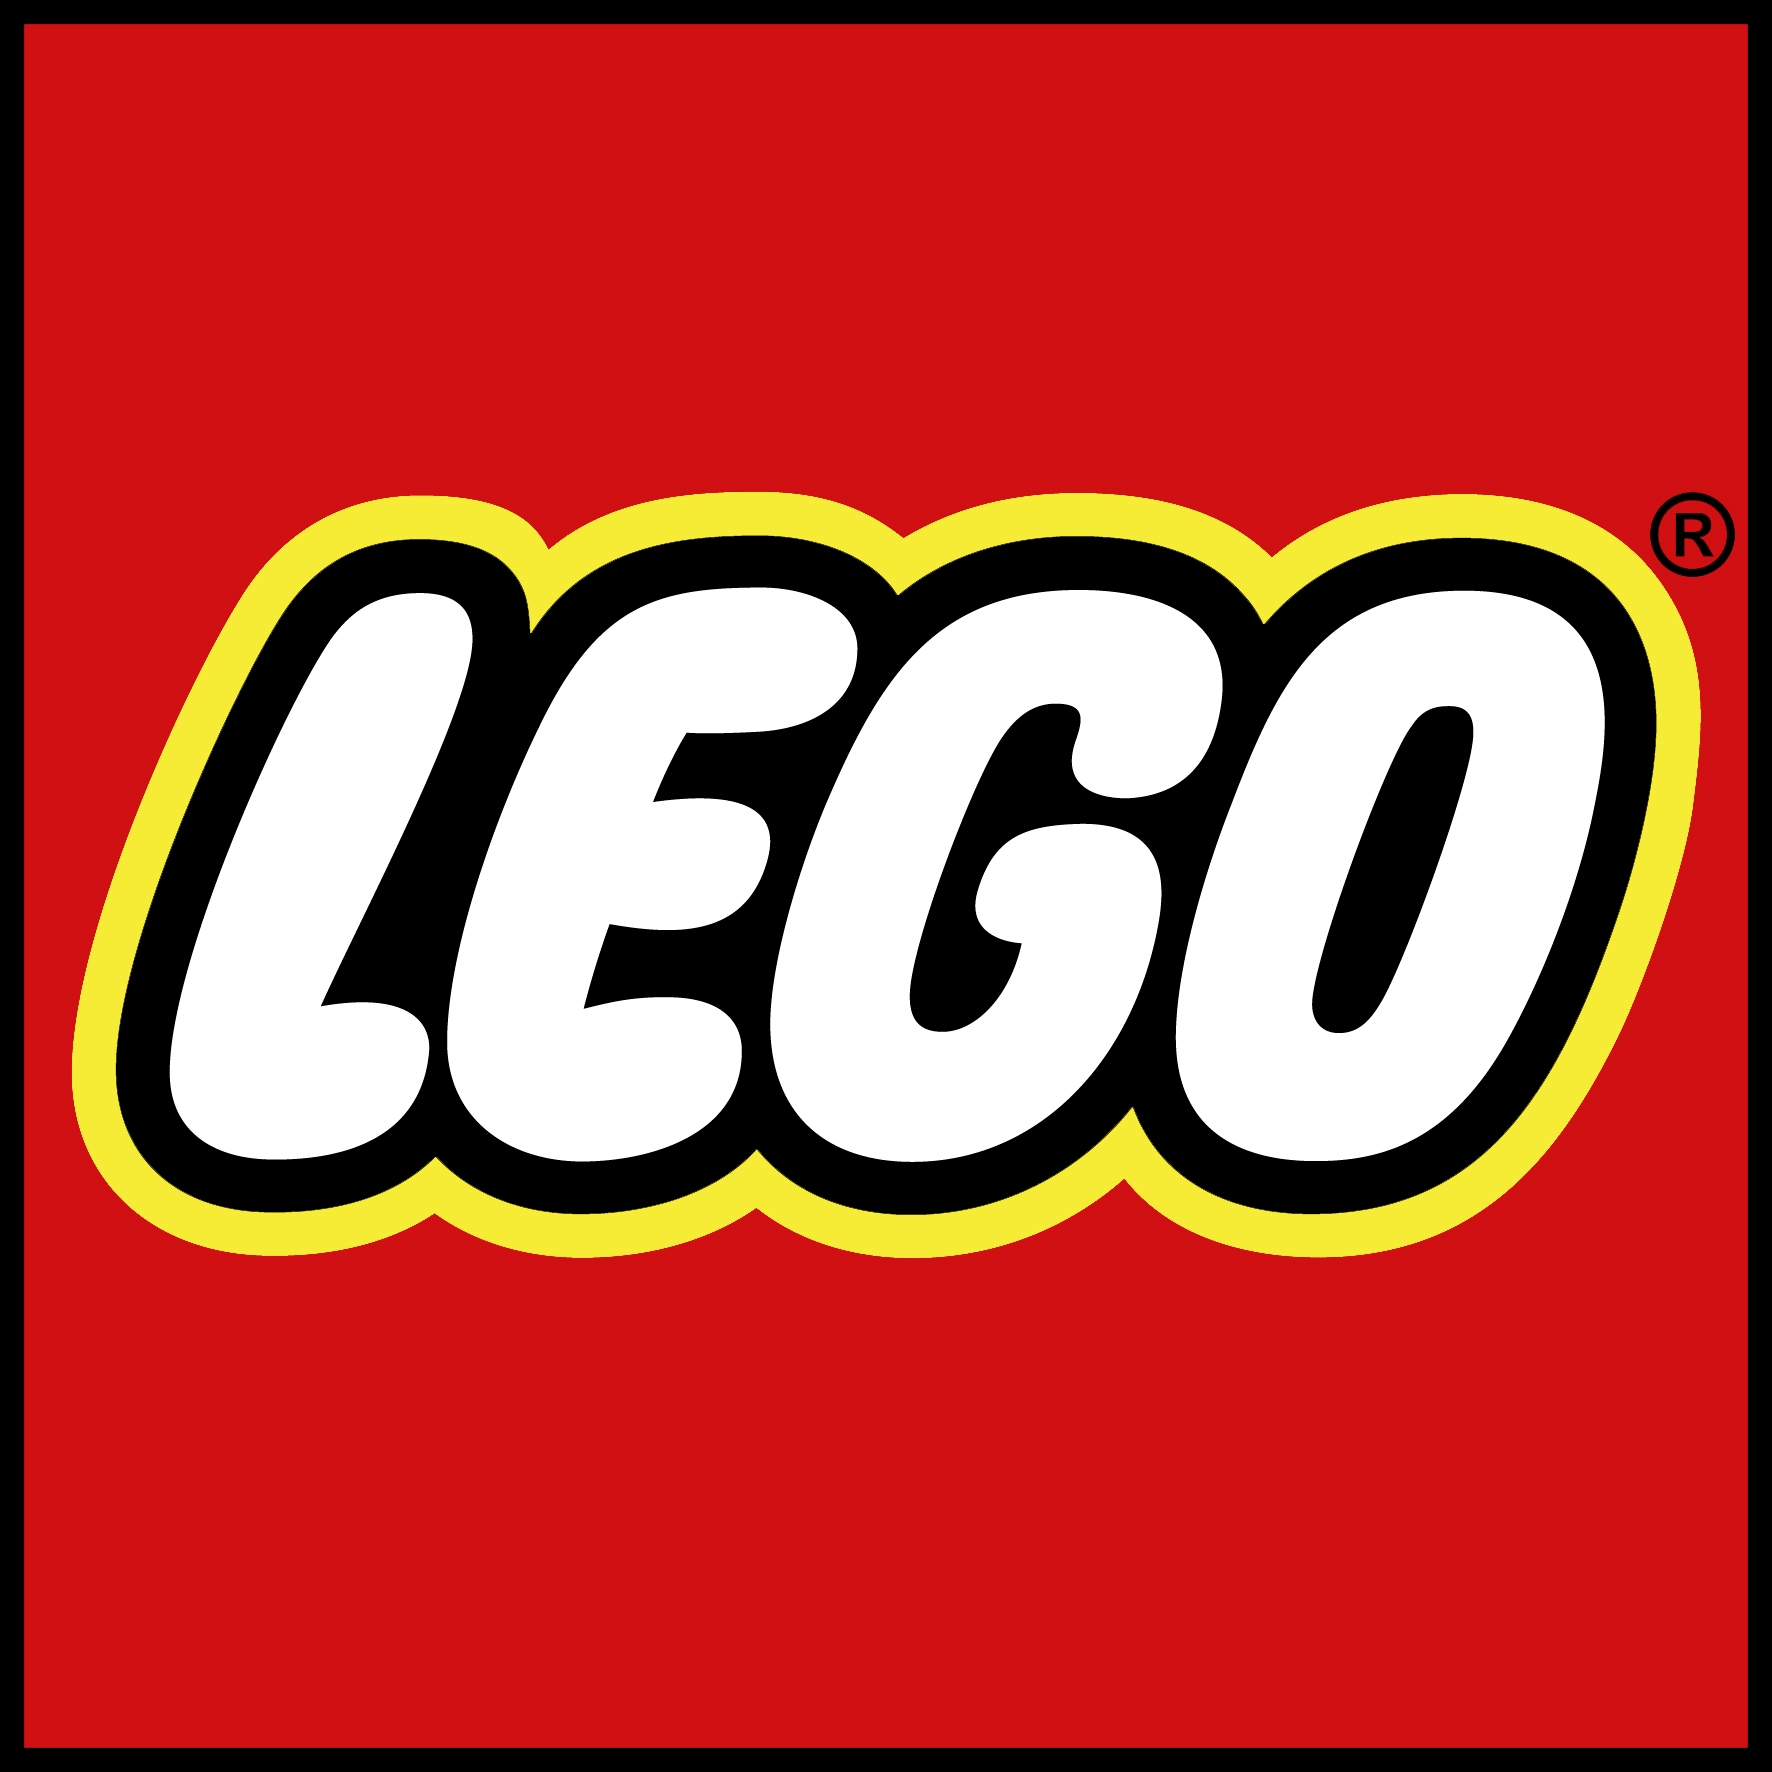 LEGO-logo1